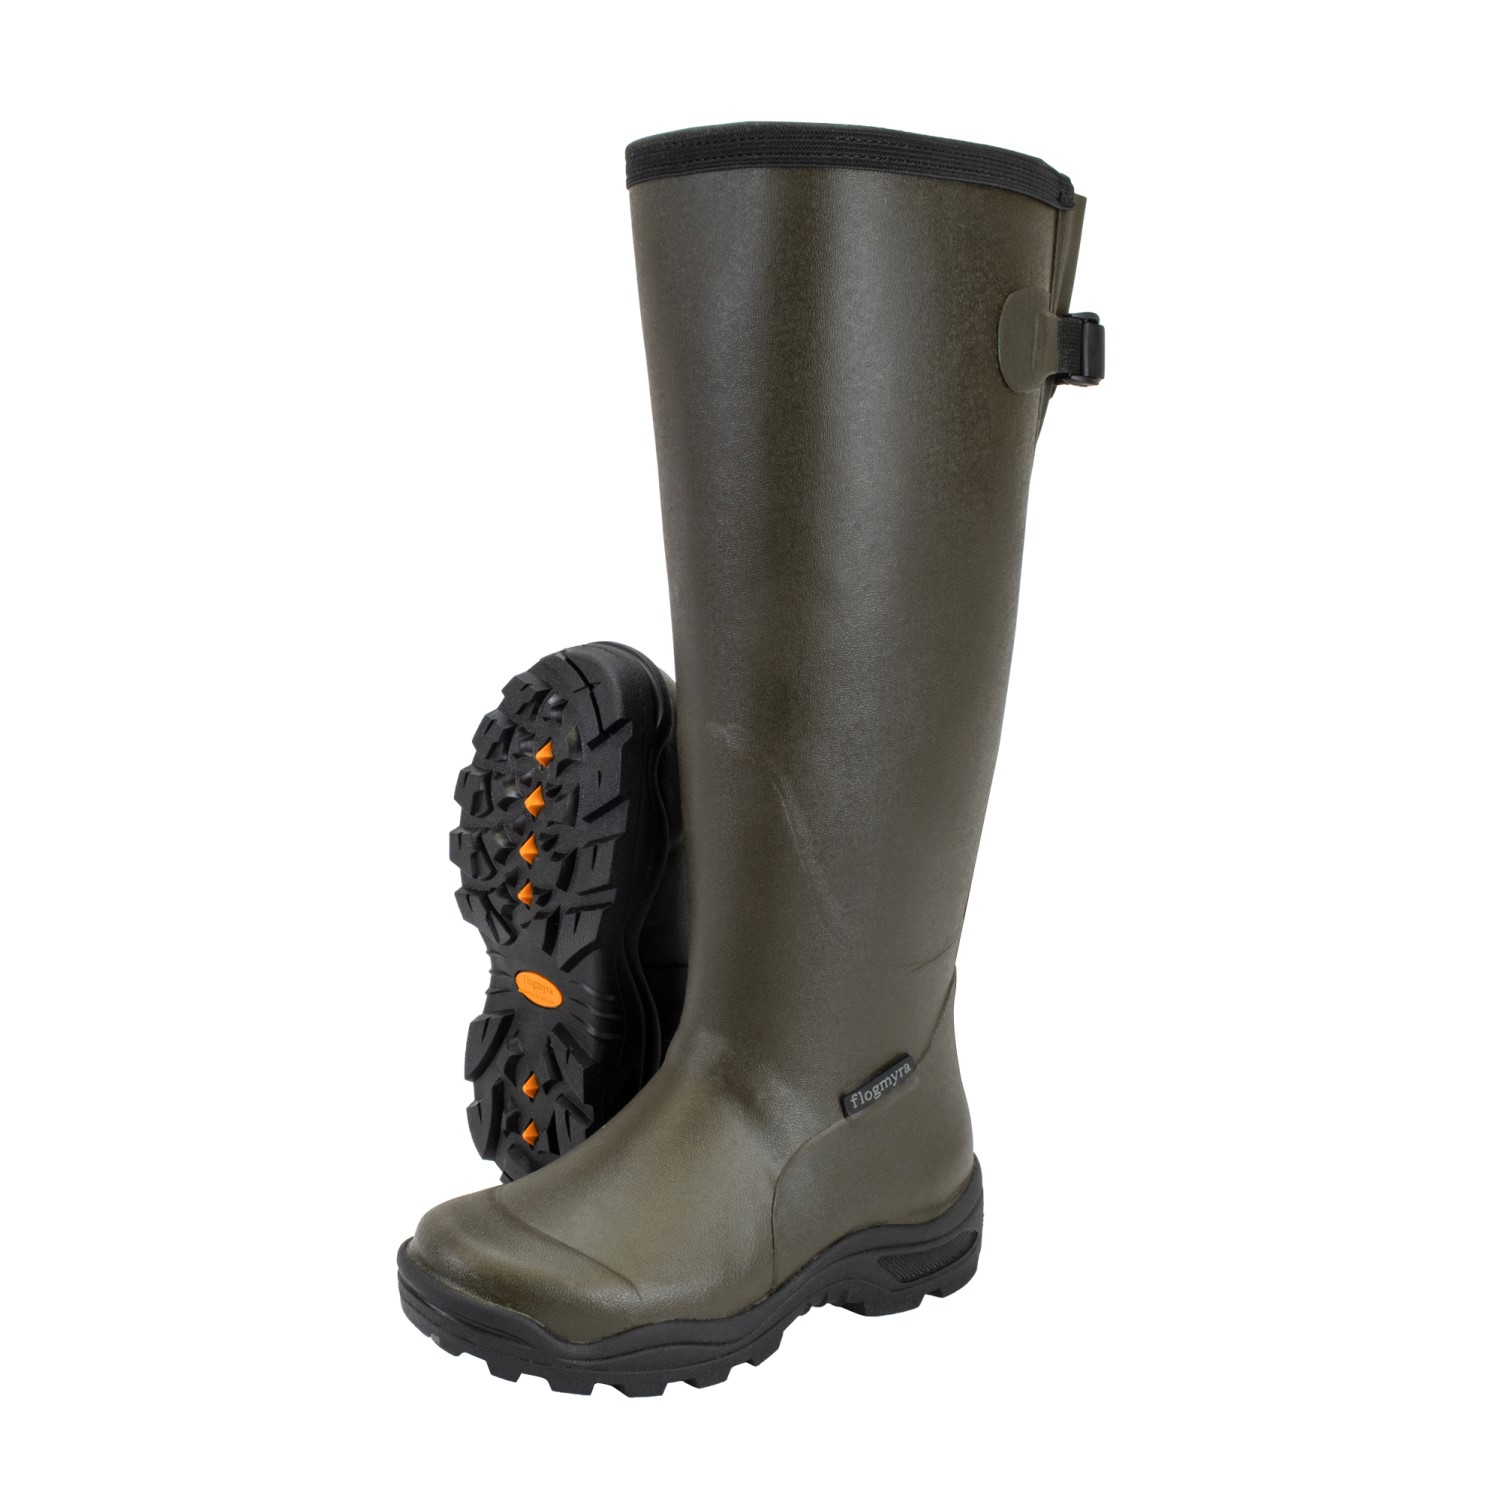 MAD All Terrain Boots Schuhe Stiefel Regen Outdoor Wandern Jagen Angeln Winter 